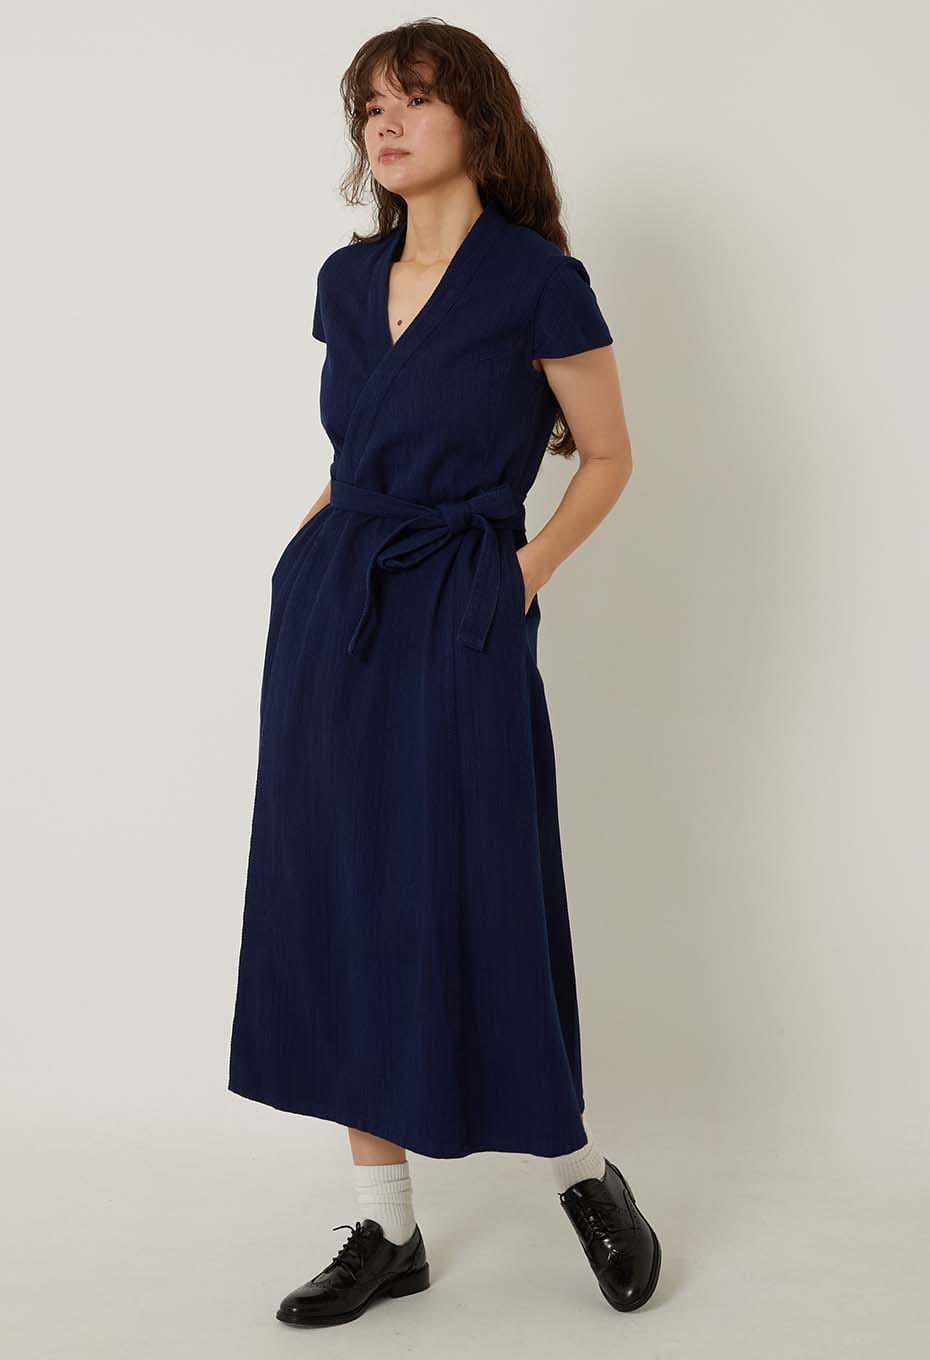 Navy Blue Satin Party Wear Dress | Stylish and Elegant